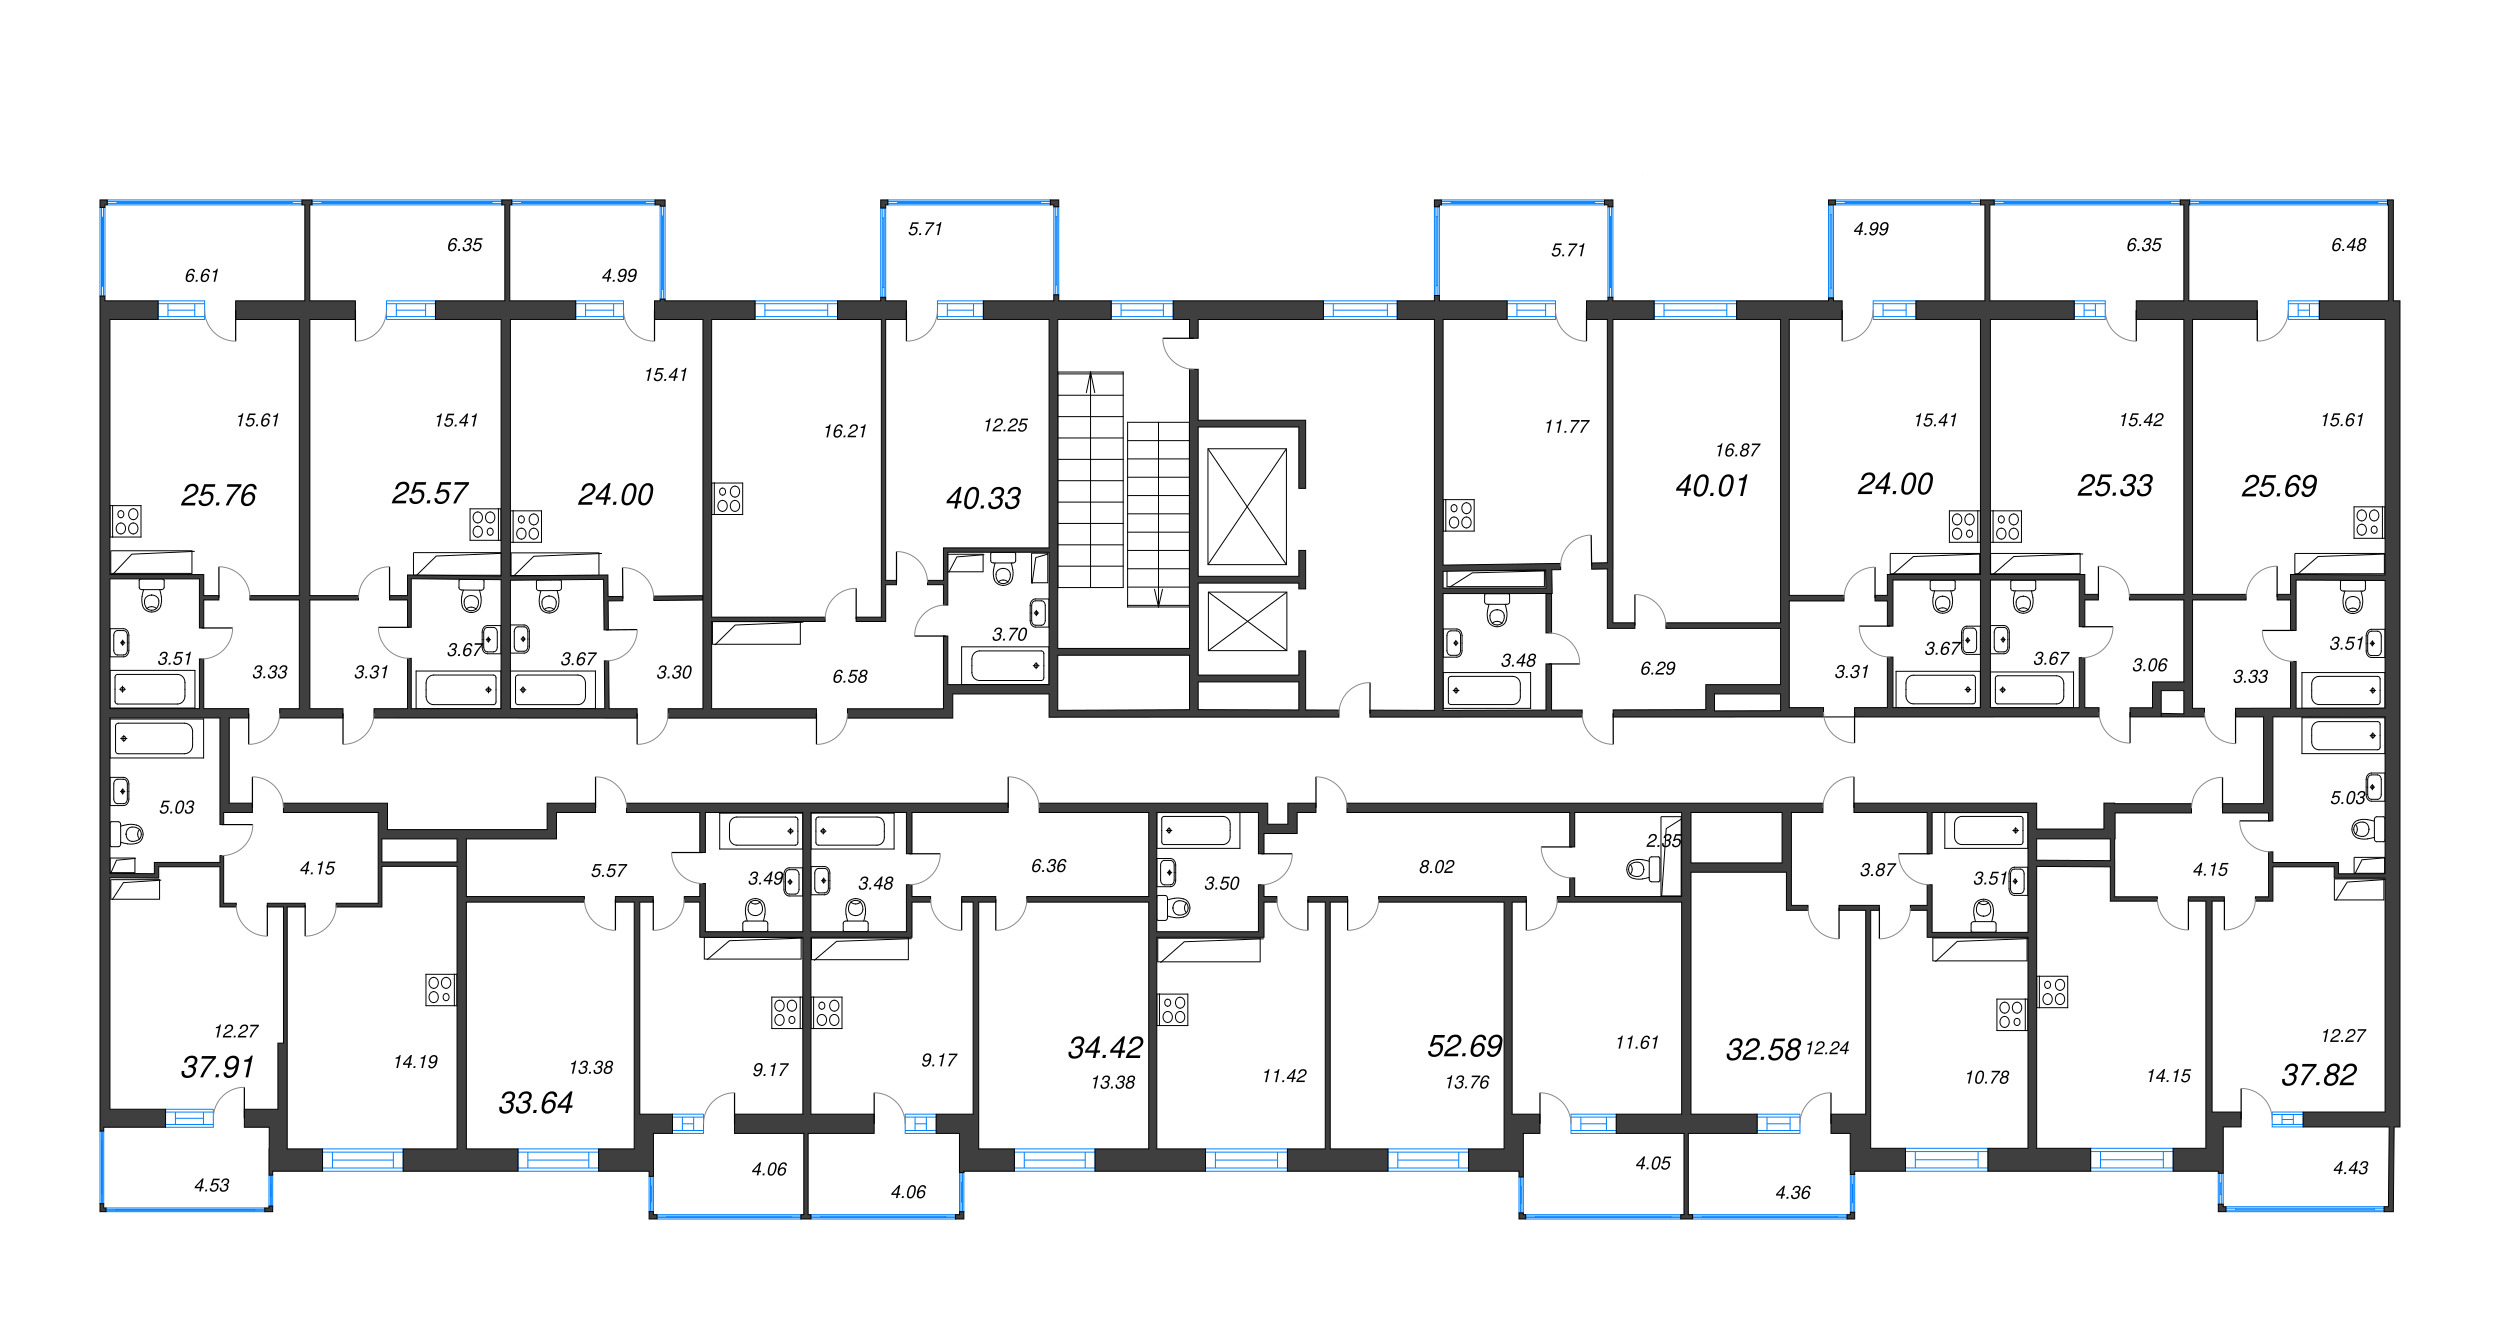 2-комнатная (Евро) квартира, 40.33 м² - планировка этажа